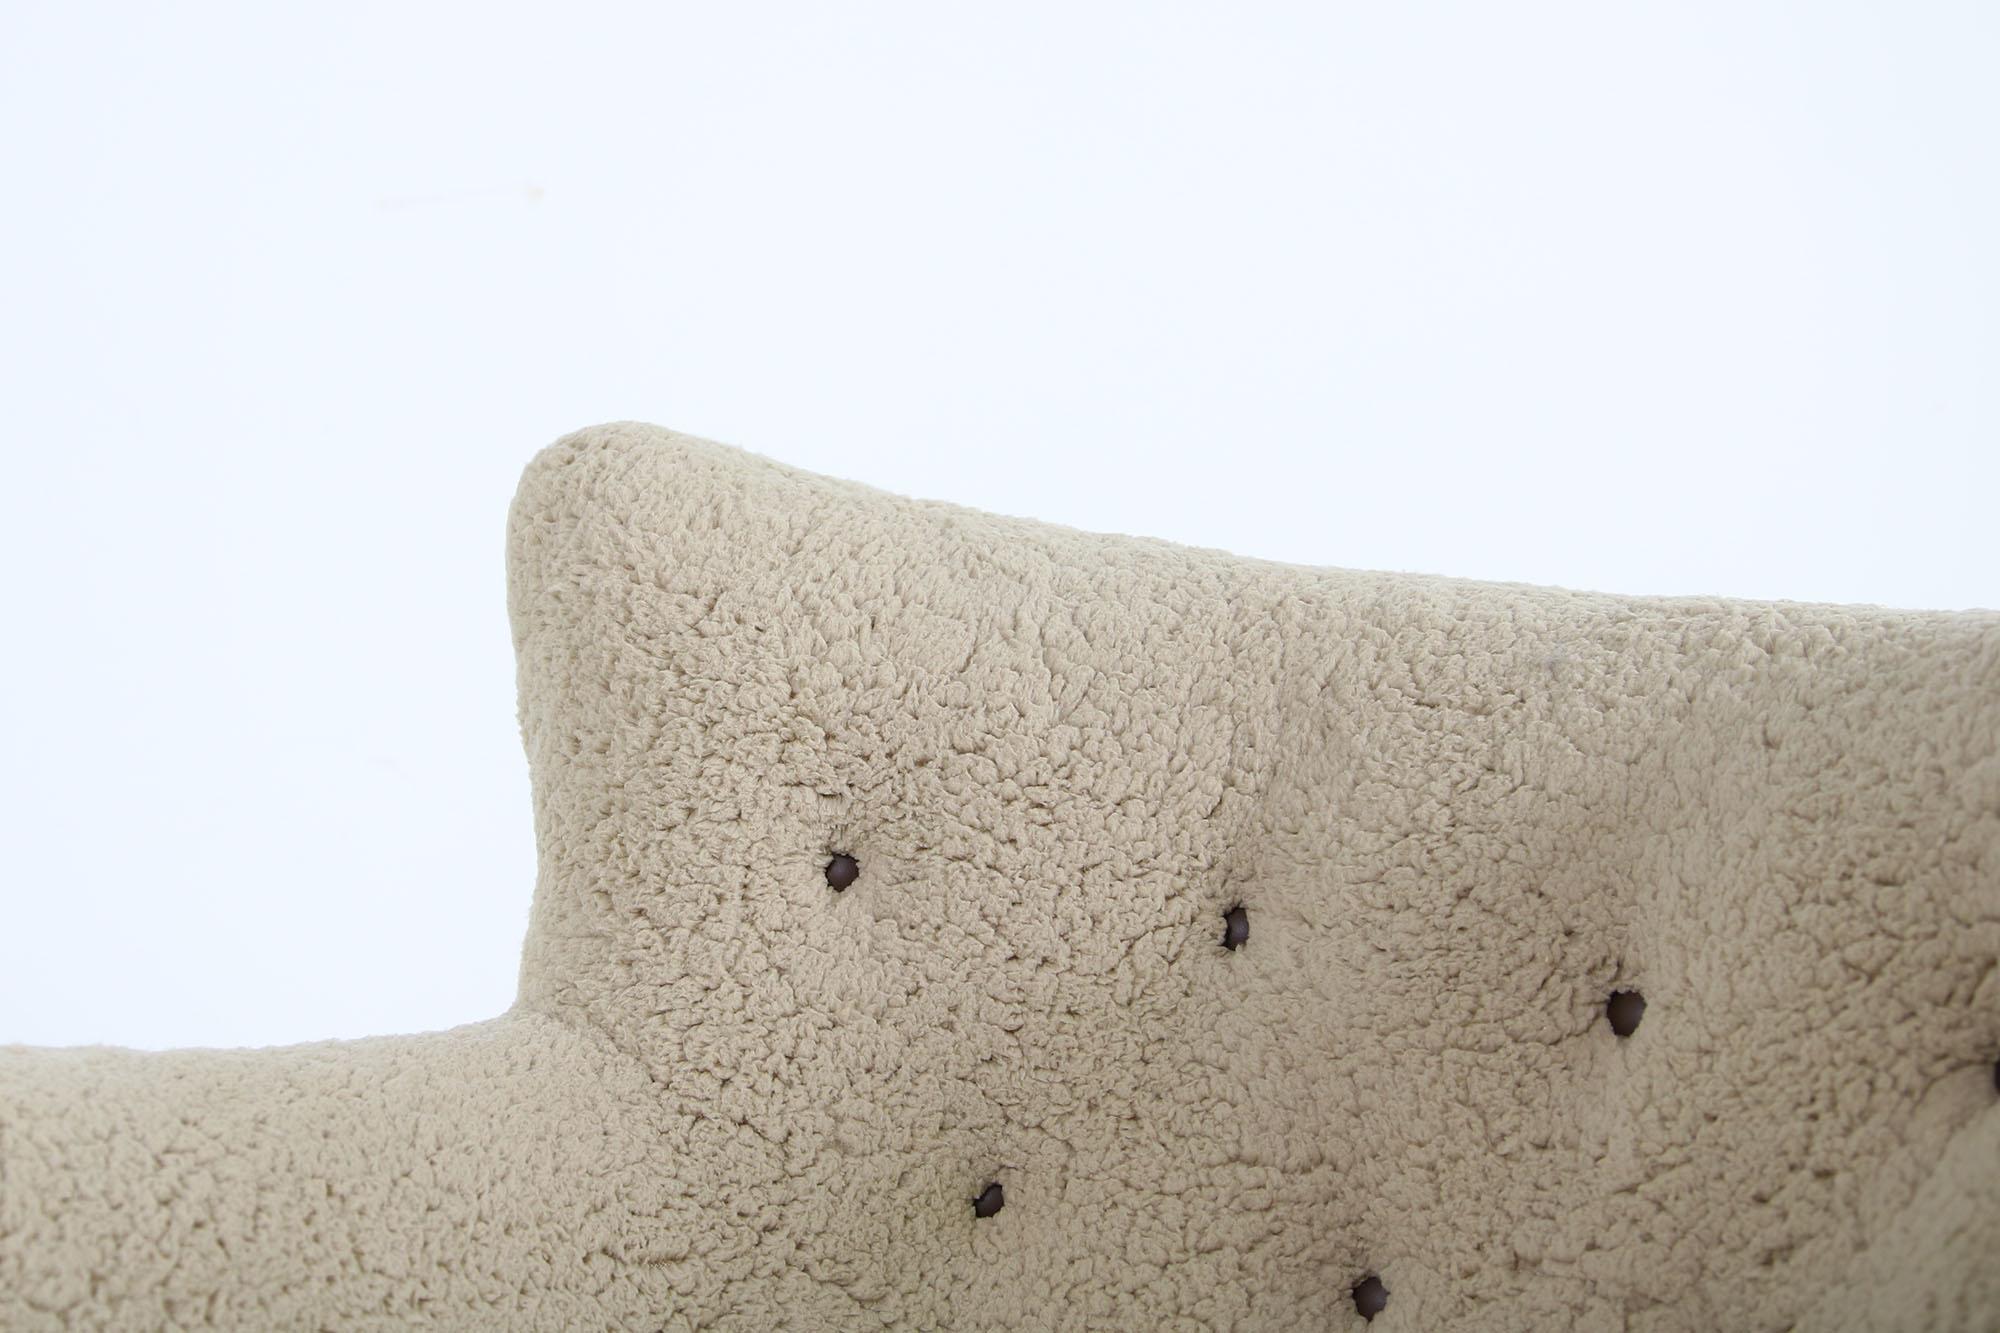 20th Century Scandinavian Modern Lounge Chair 1950s Teddy Fur & Leather, Sheepskin, Denmark C